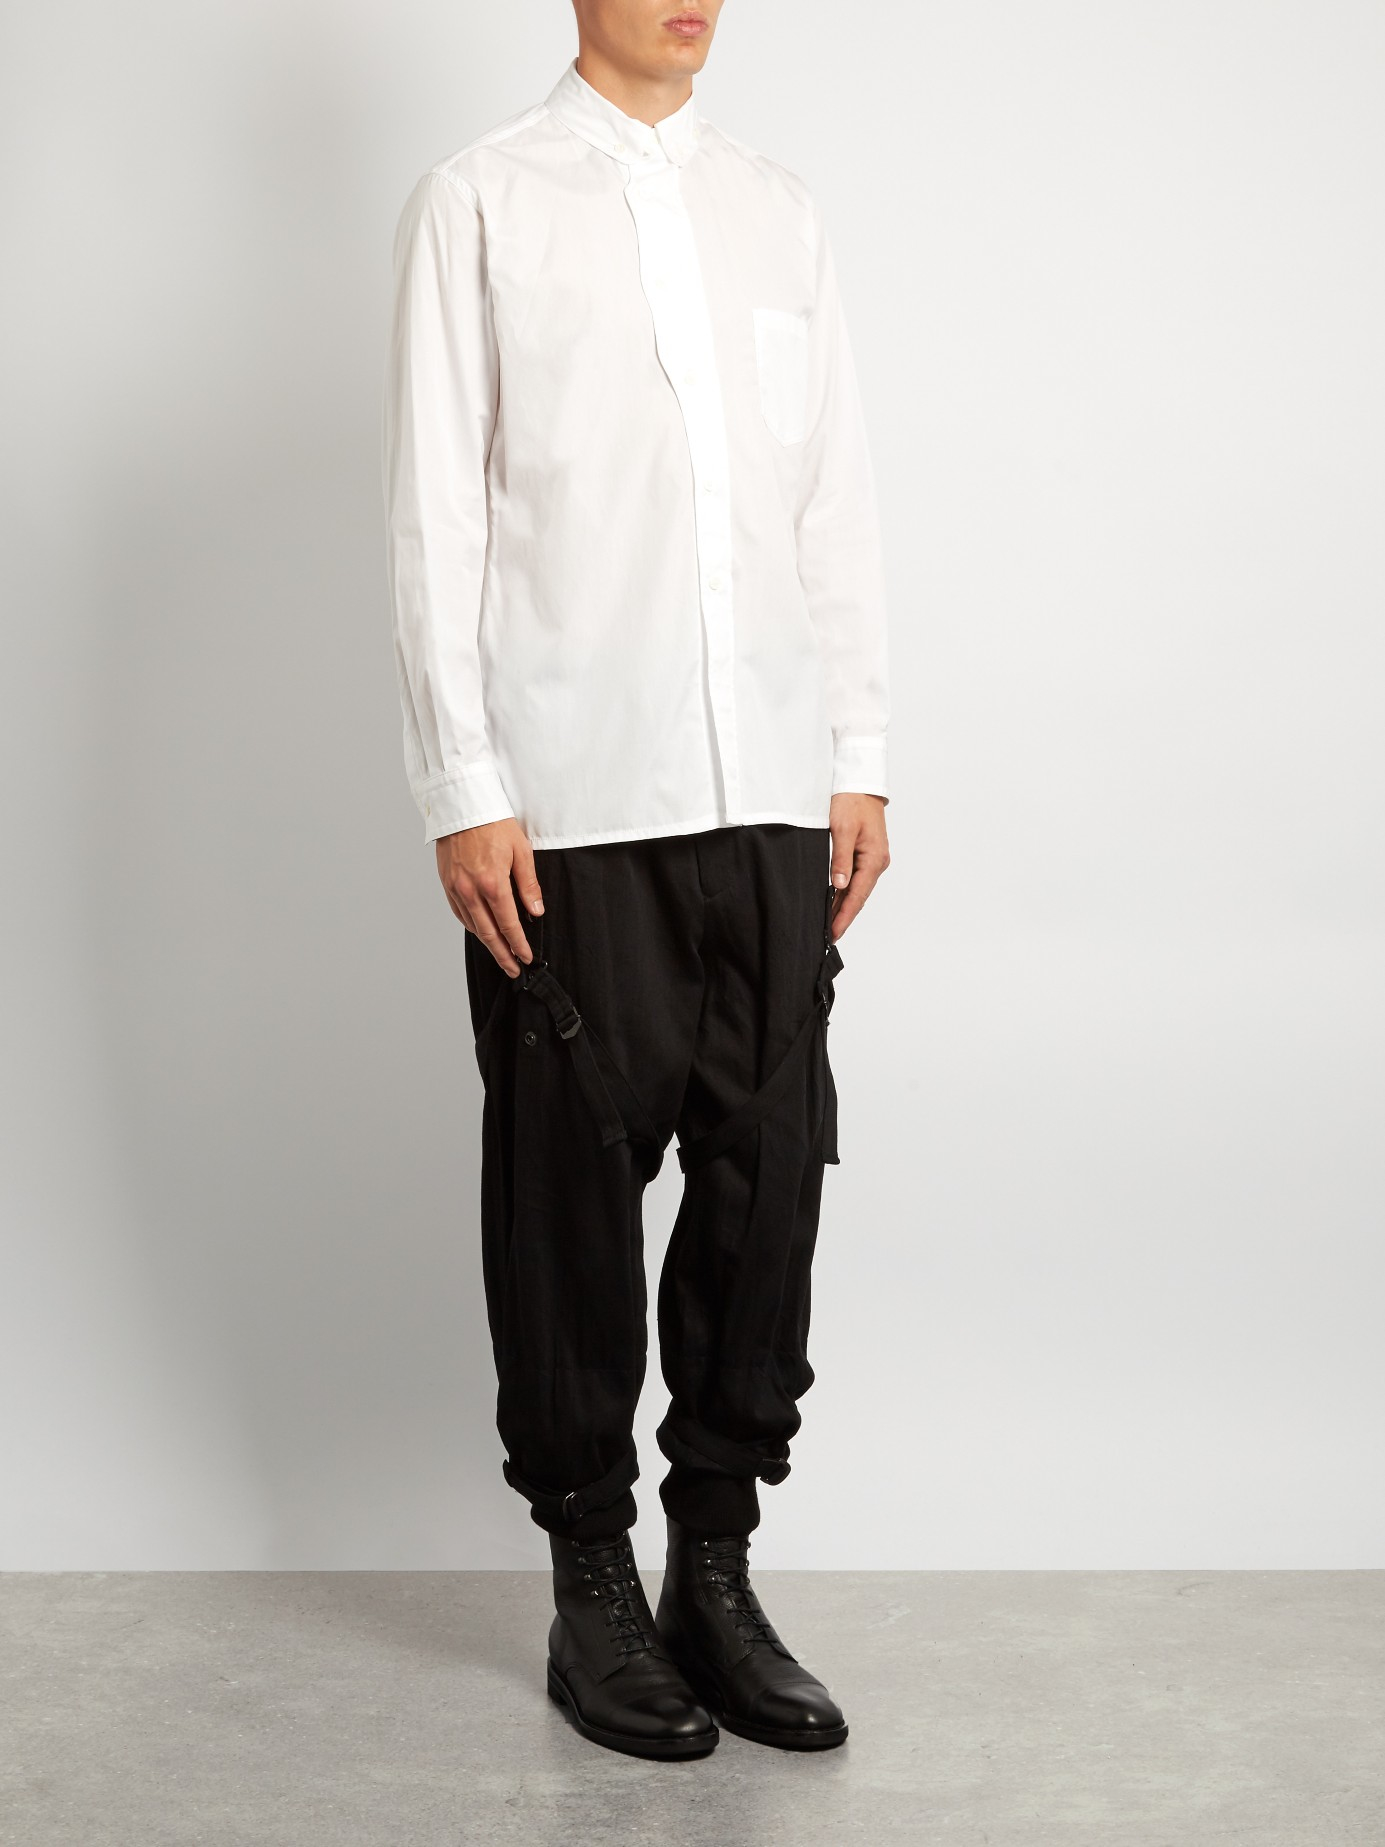 Lyst - Yohji Yamamoto Waved-placket Cotton-poplin Shirt in White for Men